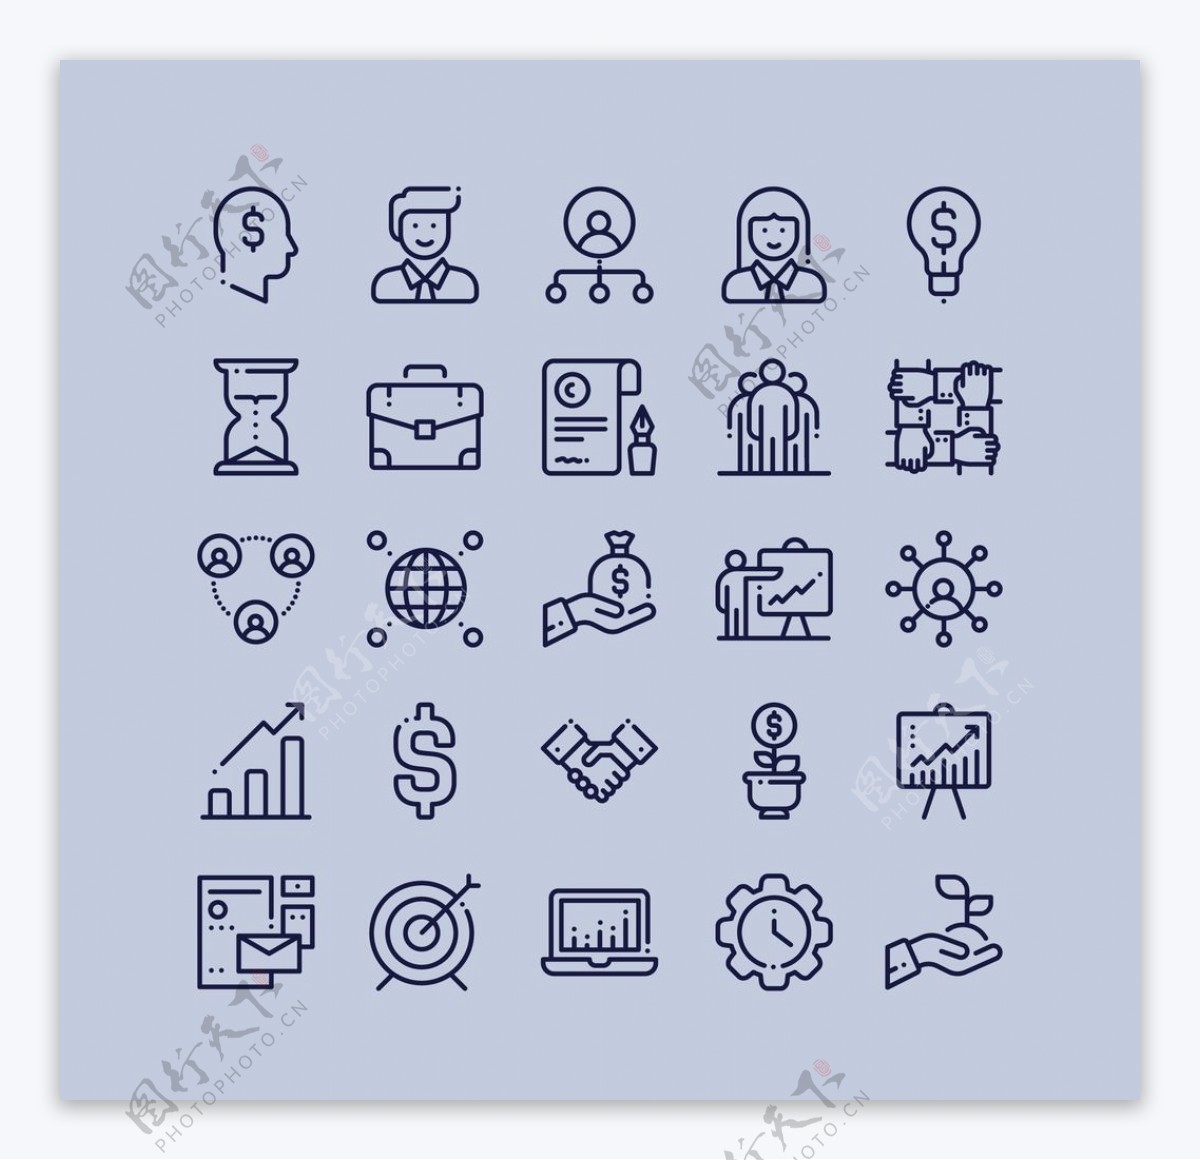 简约线性商务icon图标设计